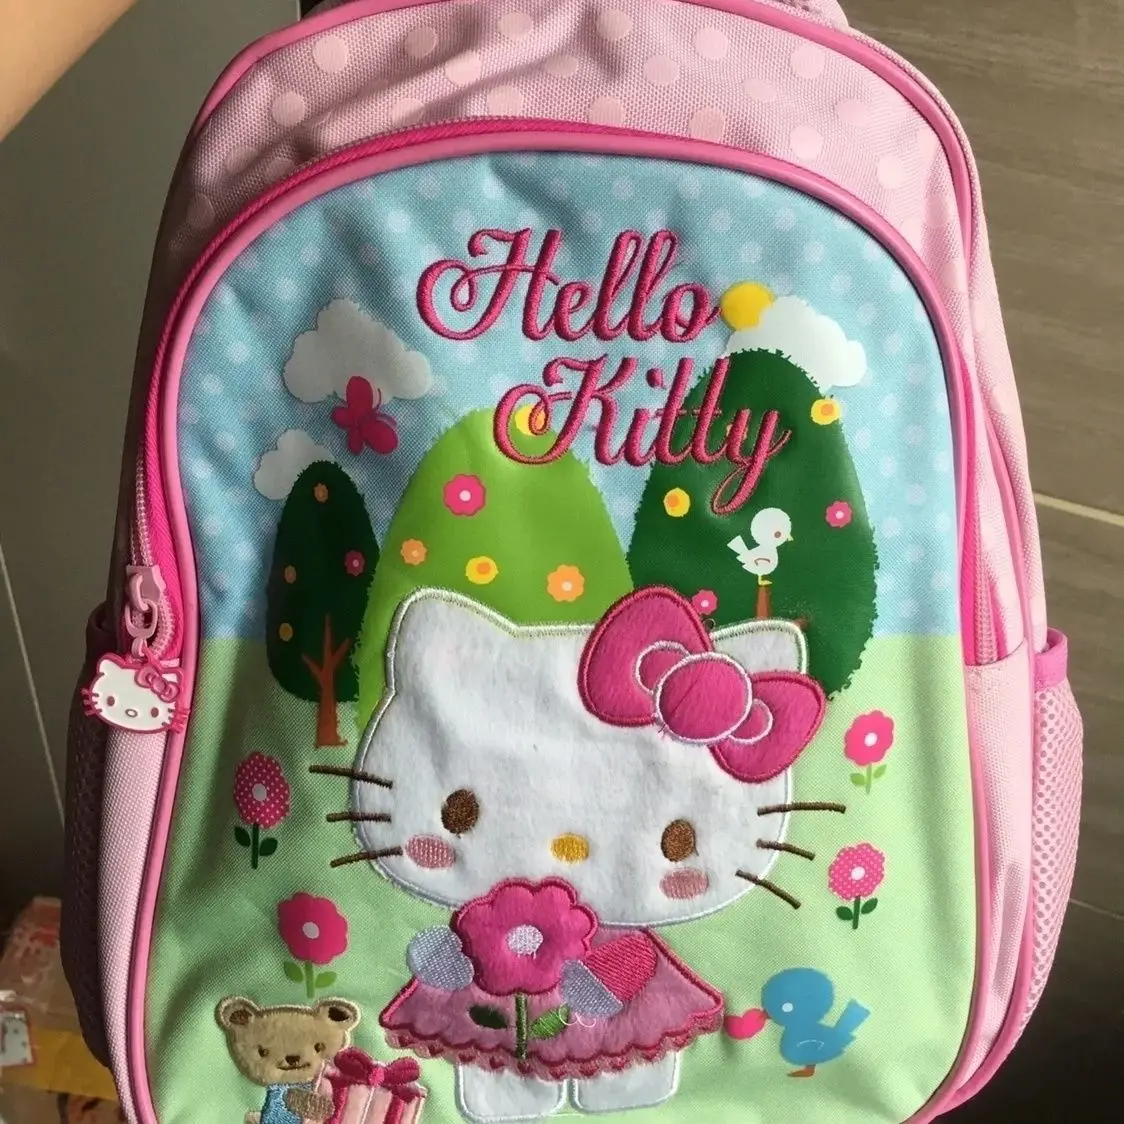 School Kawaii Cute BackpackHigh School Student Girl's Schoolbag Female Hello Kitty Bag Y Backpack Lightweight Cute Princess